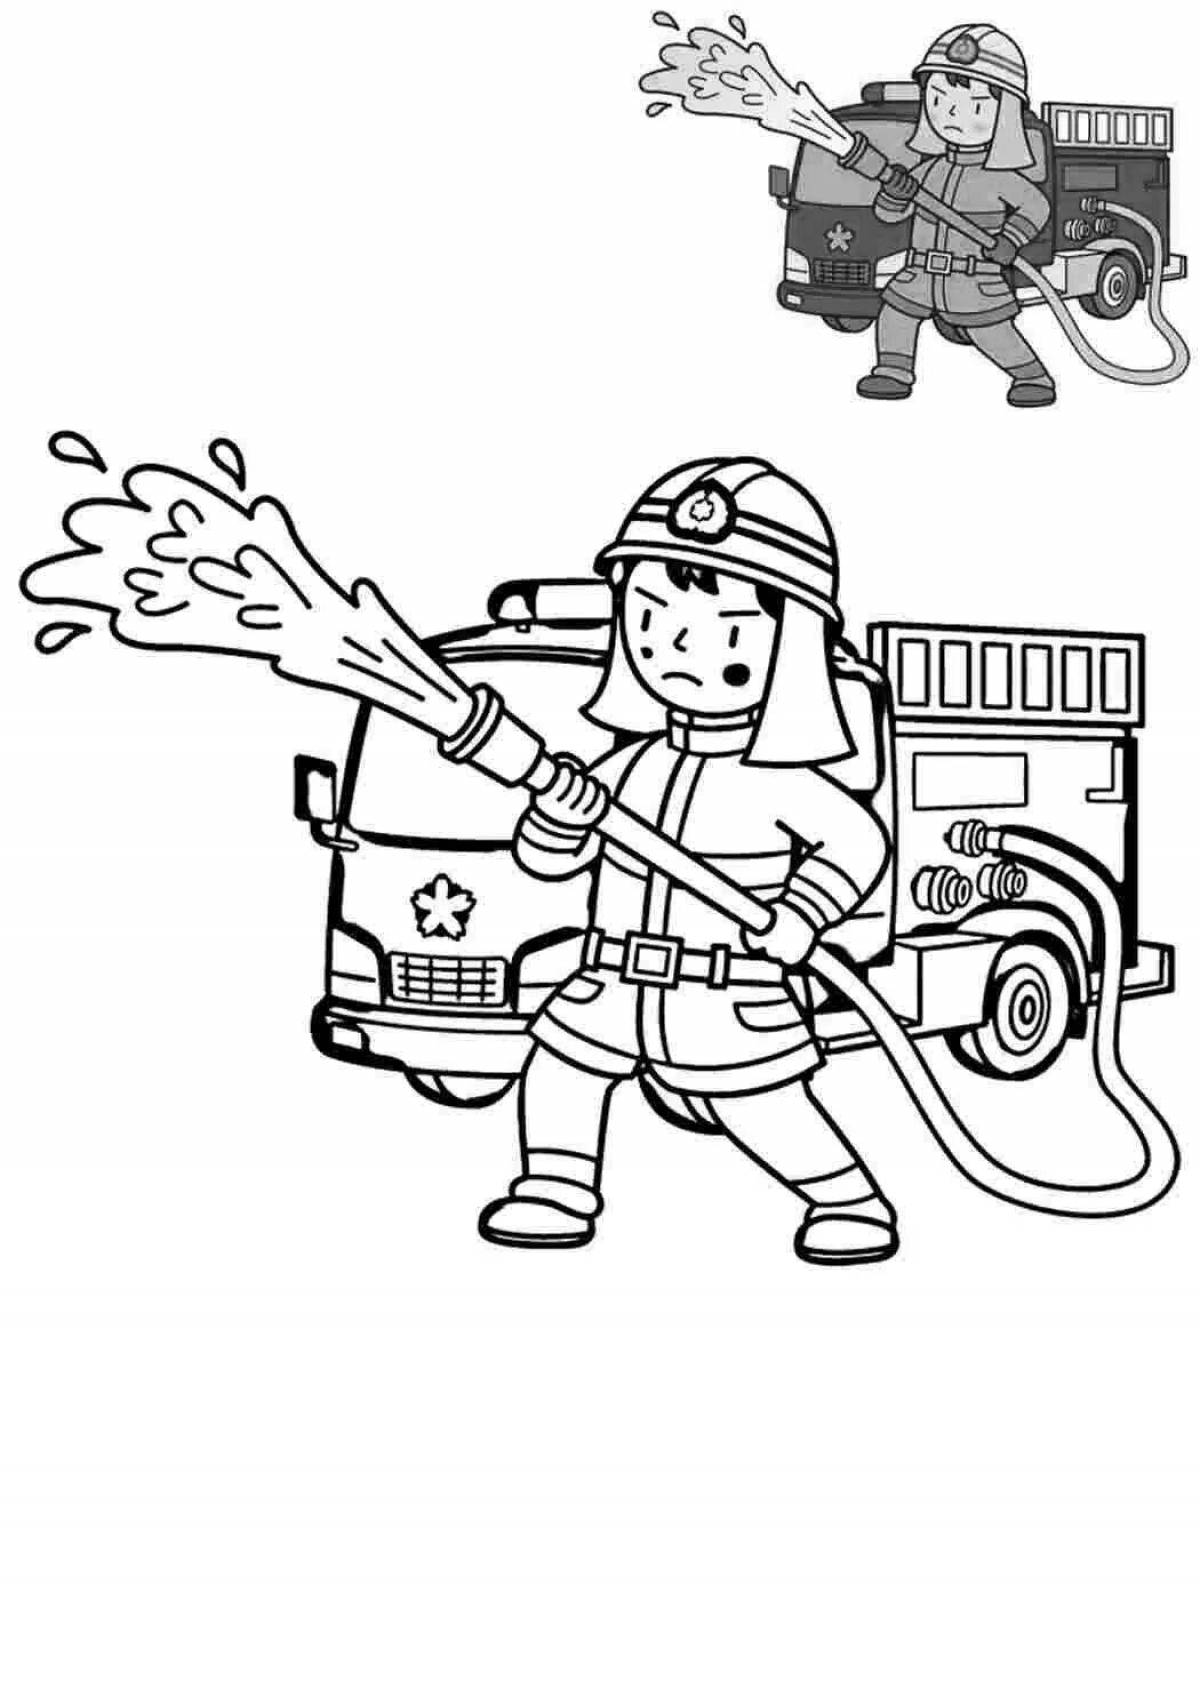 Fireman putting out fire #6